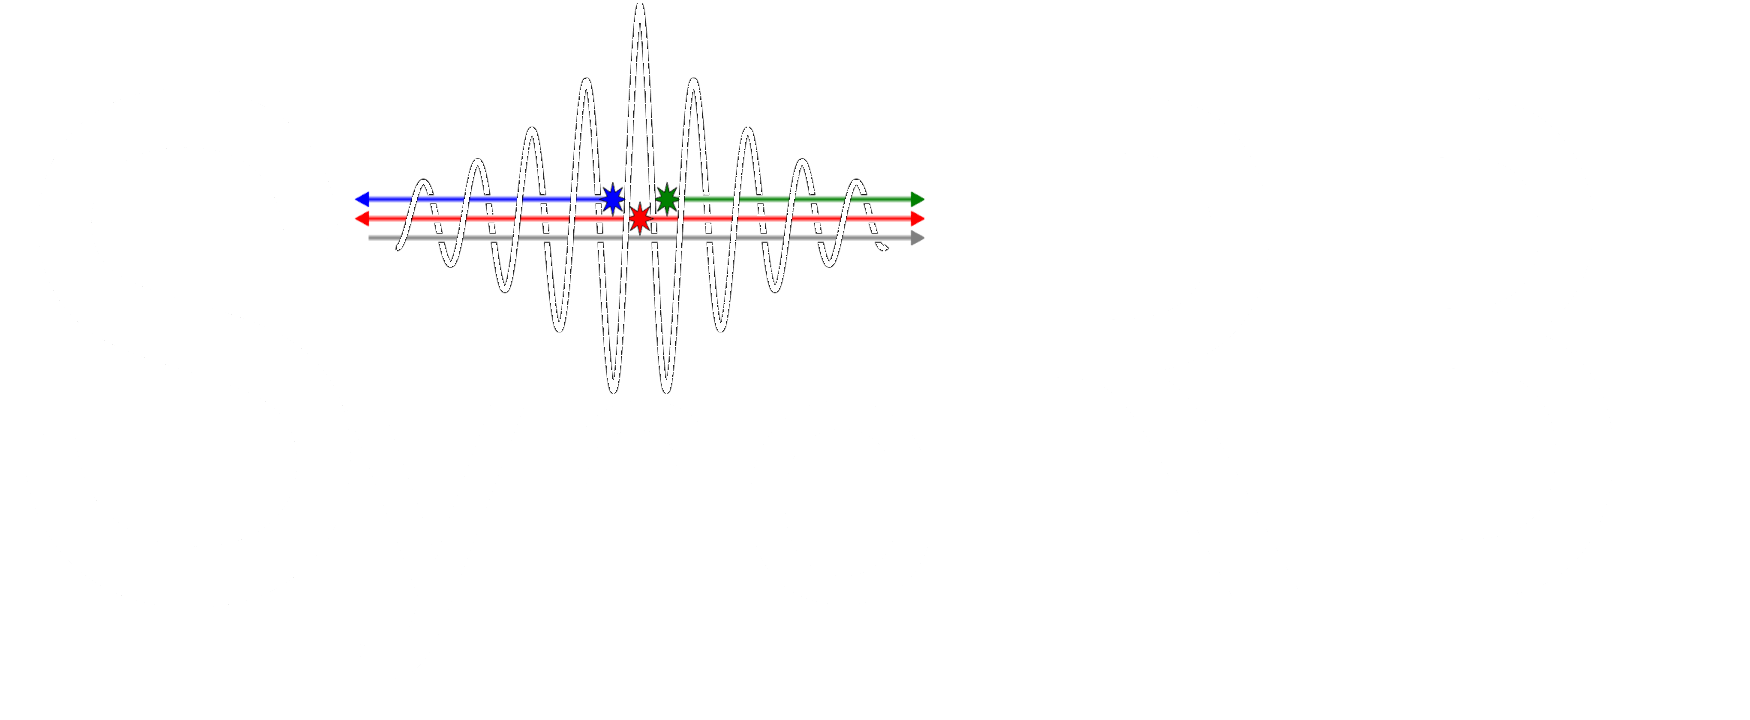 logo for CCPSynerbi